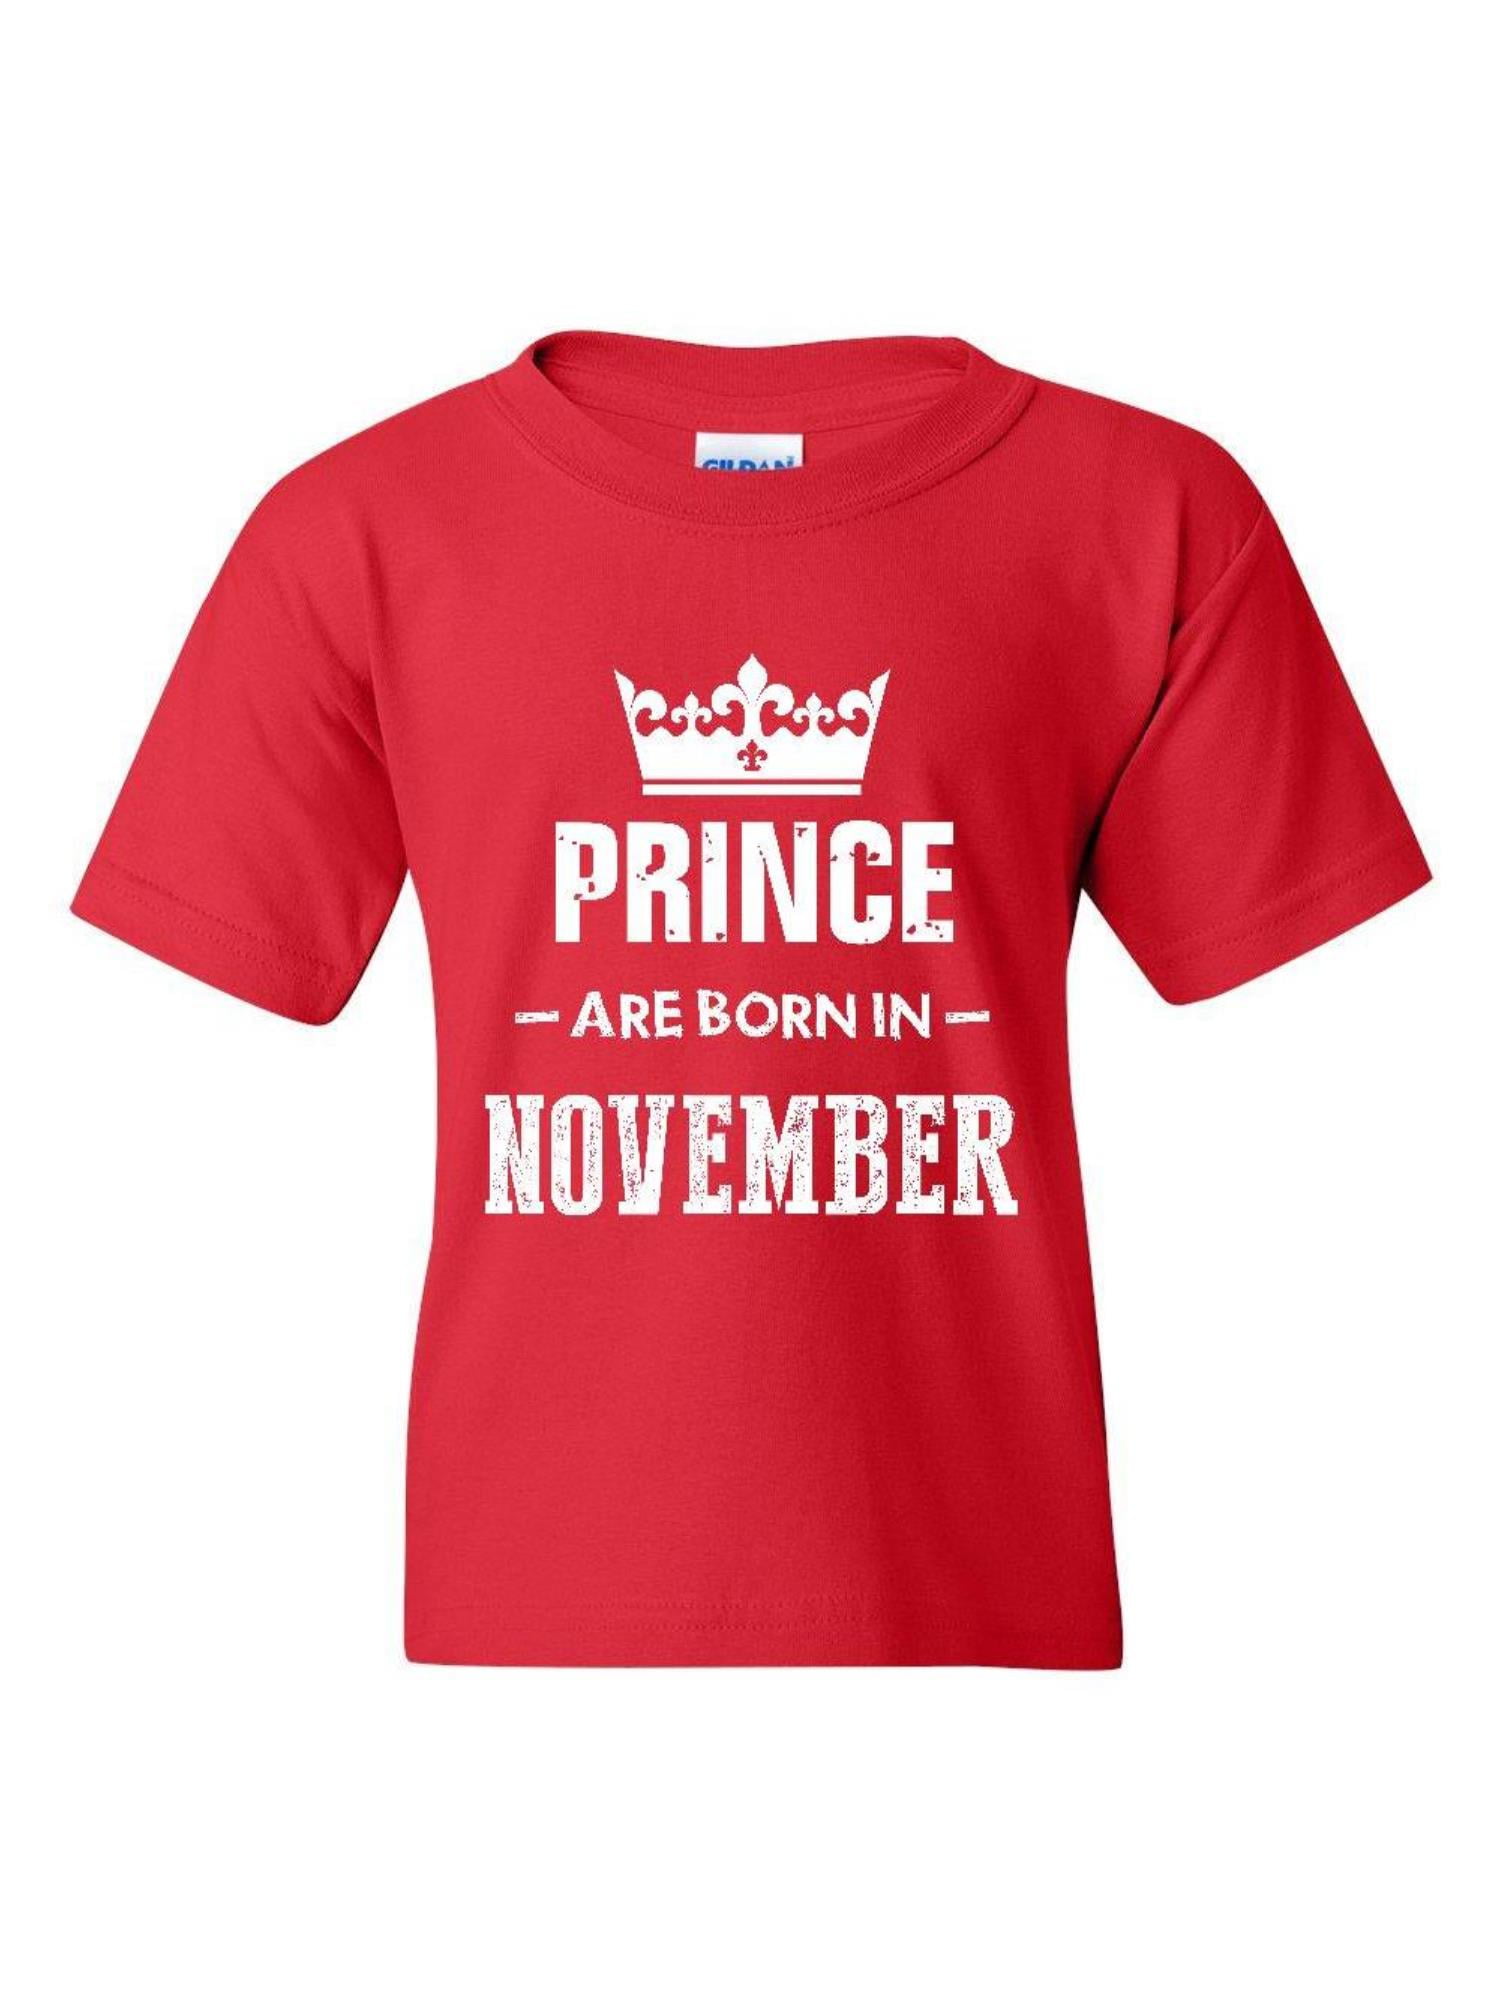 Prince Boys T Shirt Kids T-Shirt Perfect Gift Birthday Present 